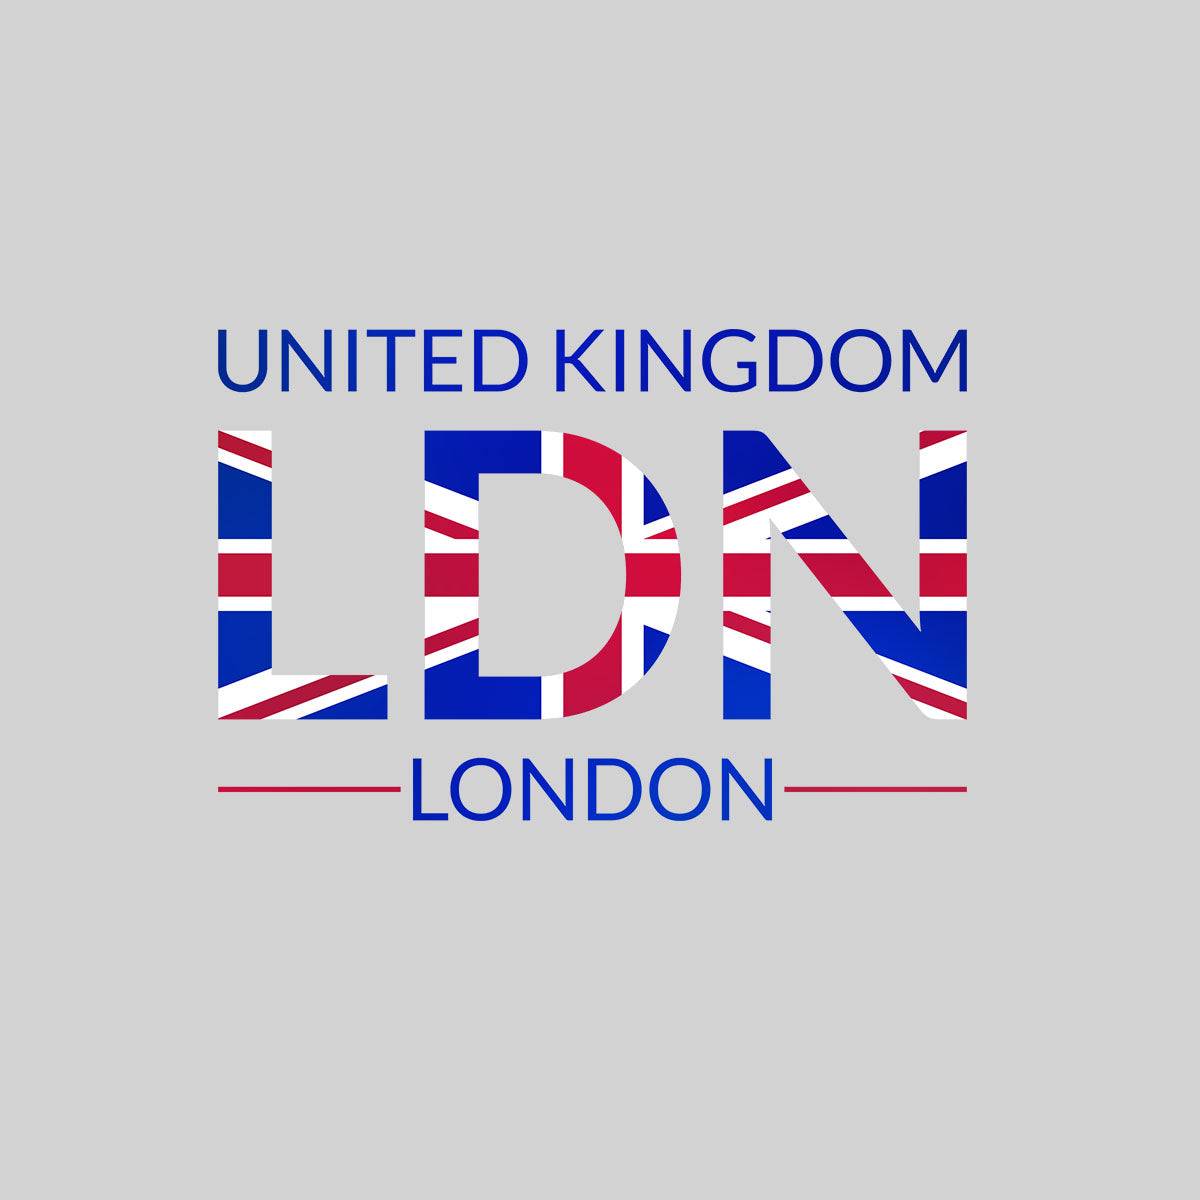 LDN Union Jack Abstract Print Kids T-Shirt London Flag - Kuzi Tees